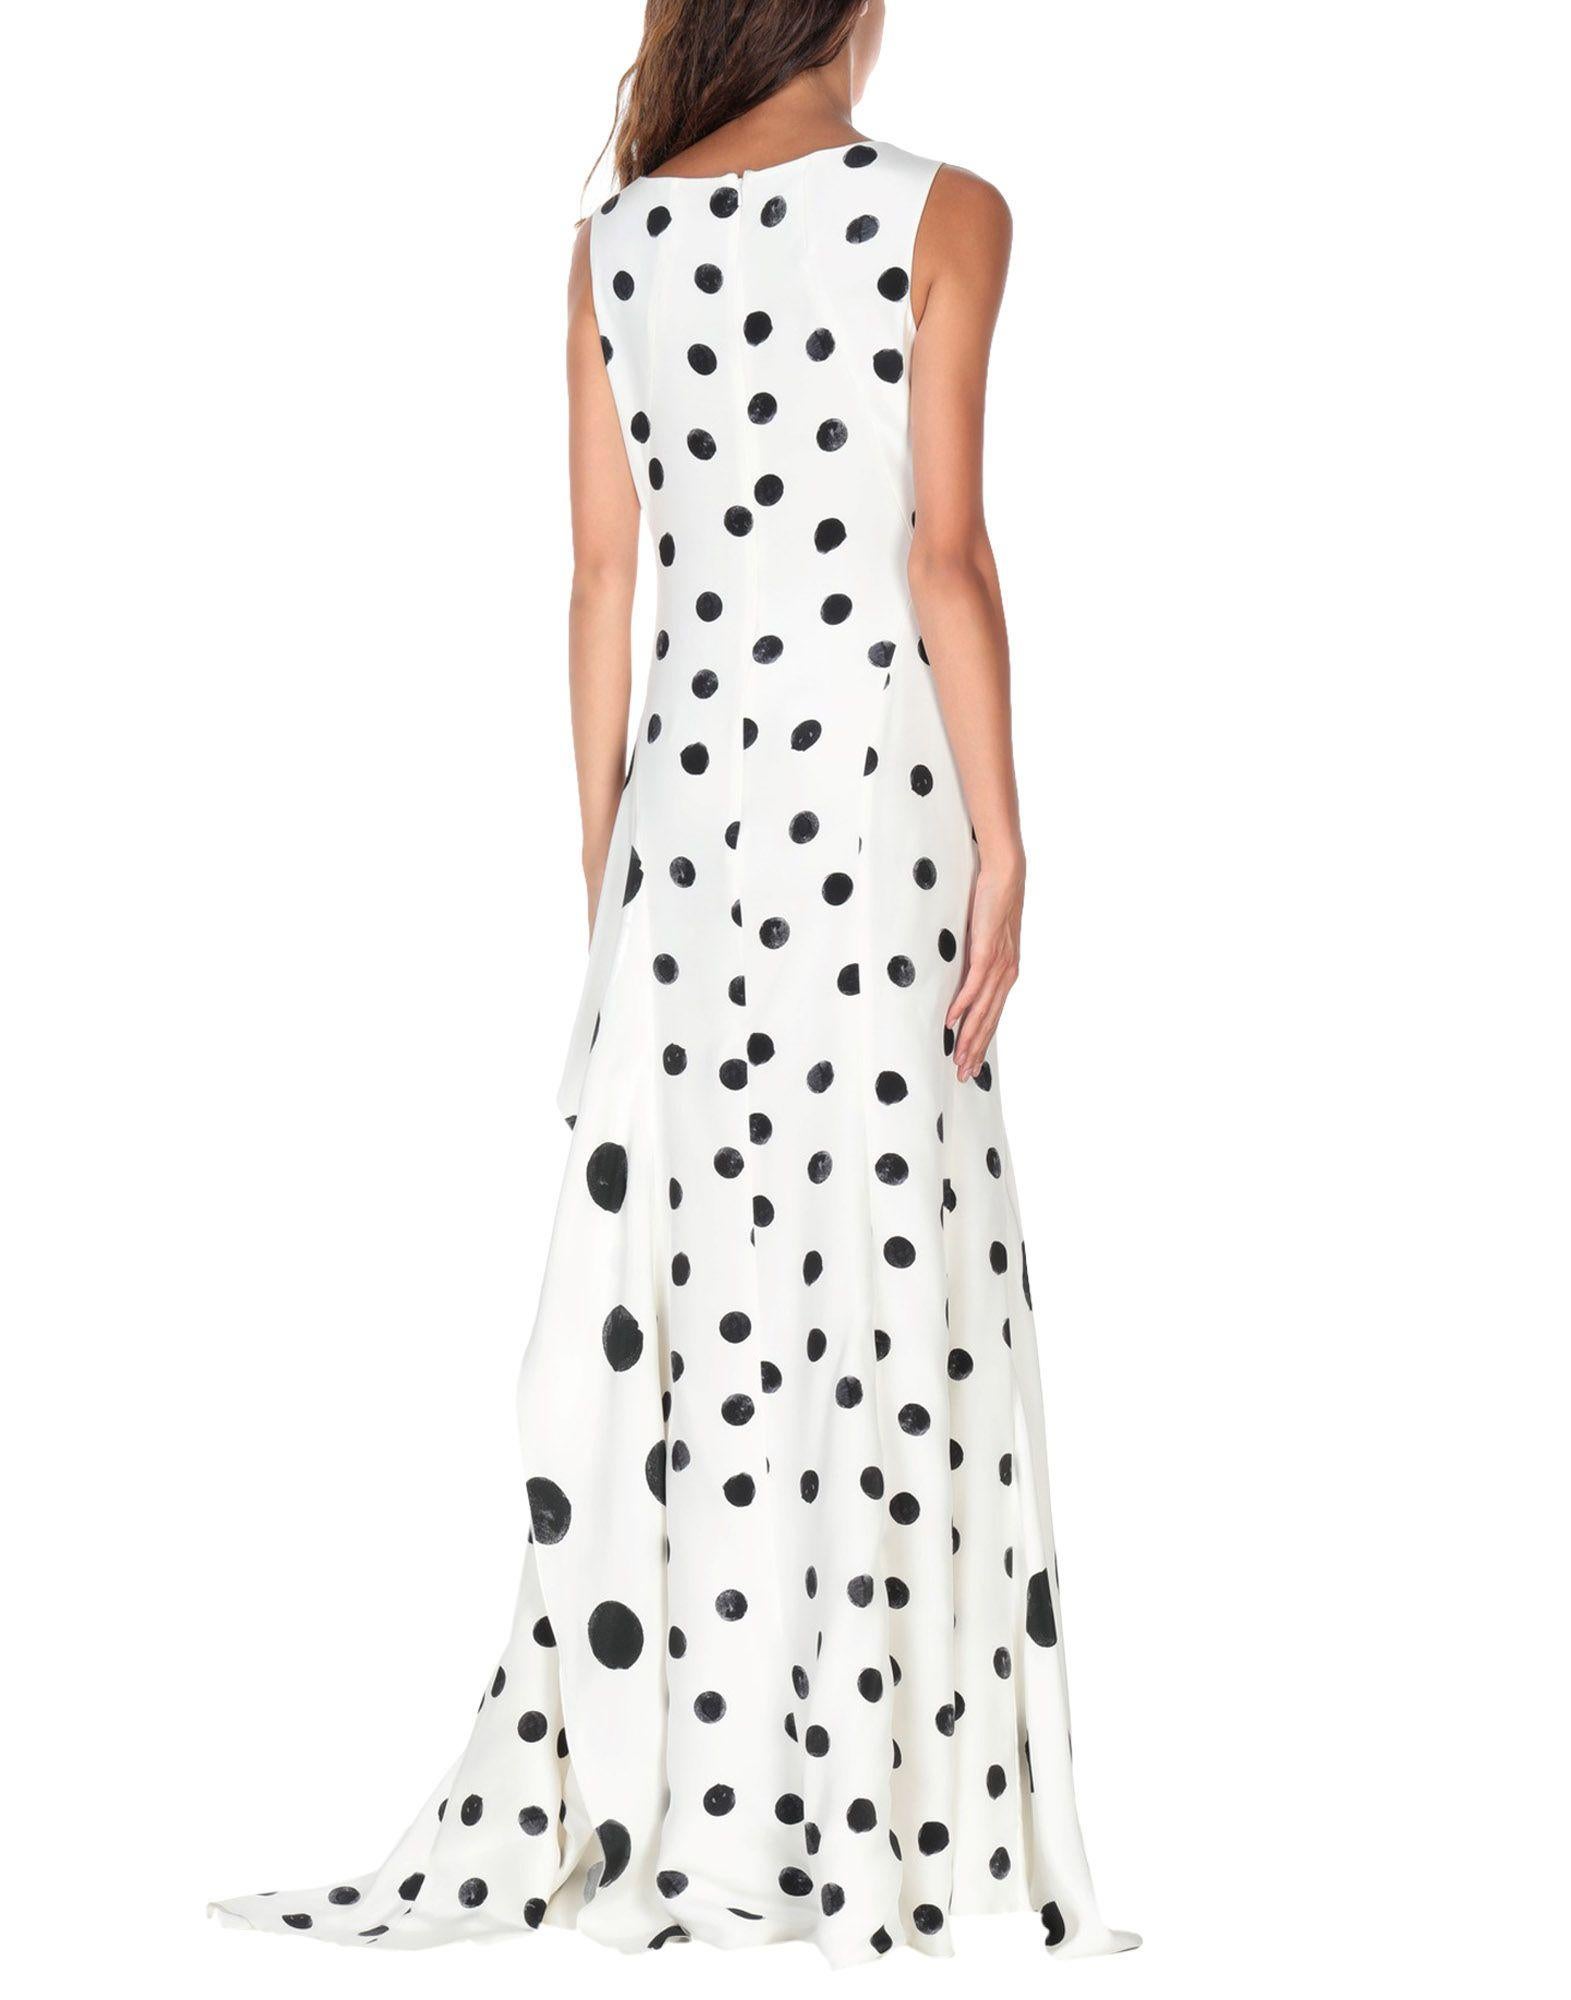 Gray New Oscar De La Renta White Polka Dot Silk Crepe Tiered Skirt Dress Gown size 4 For Sale